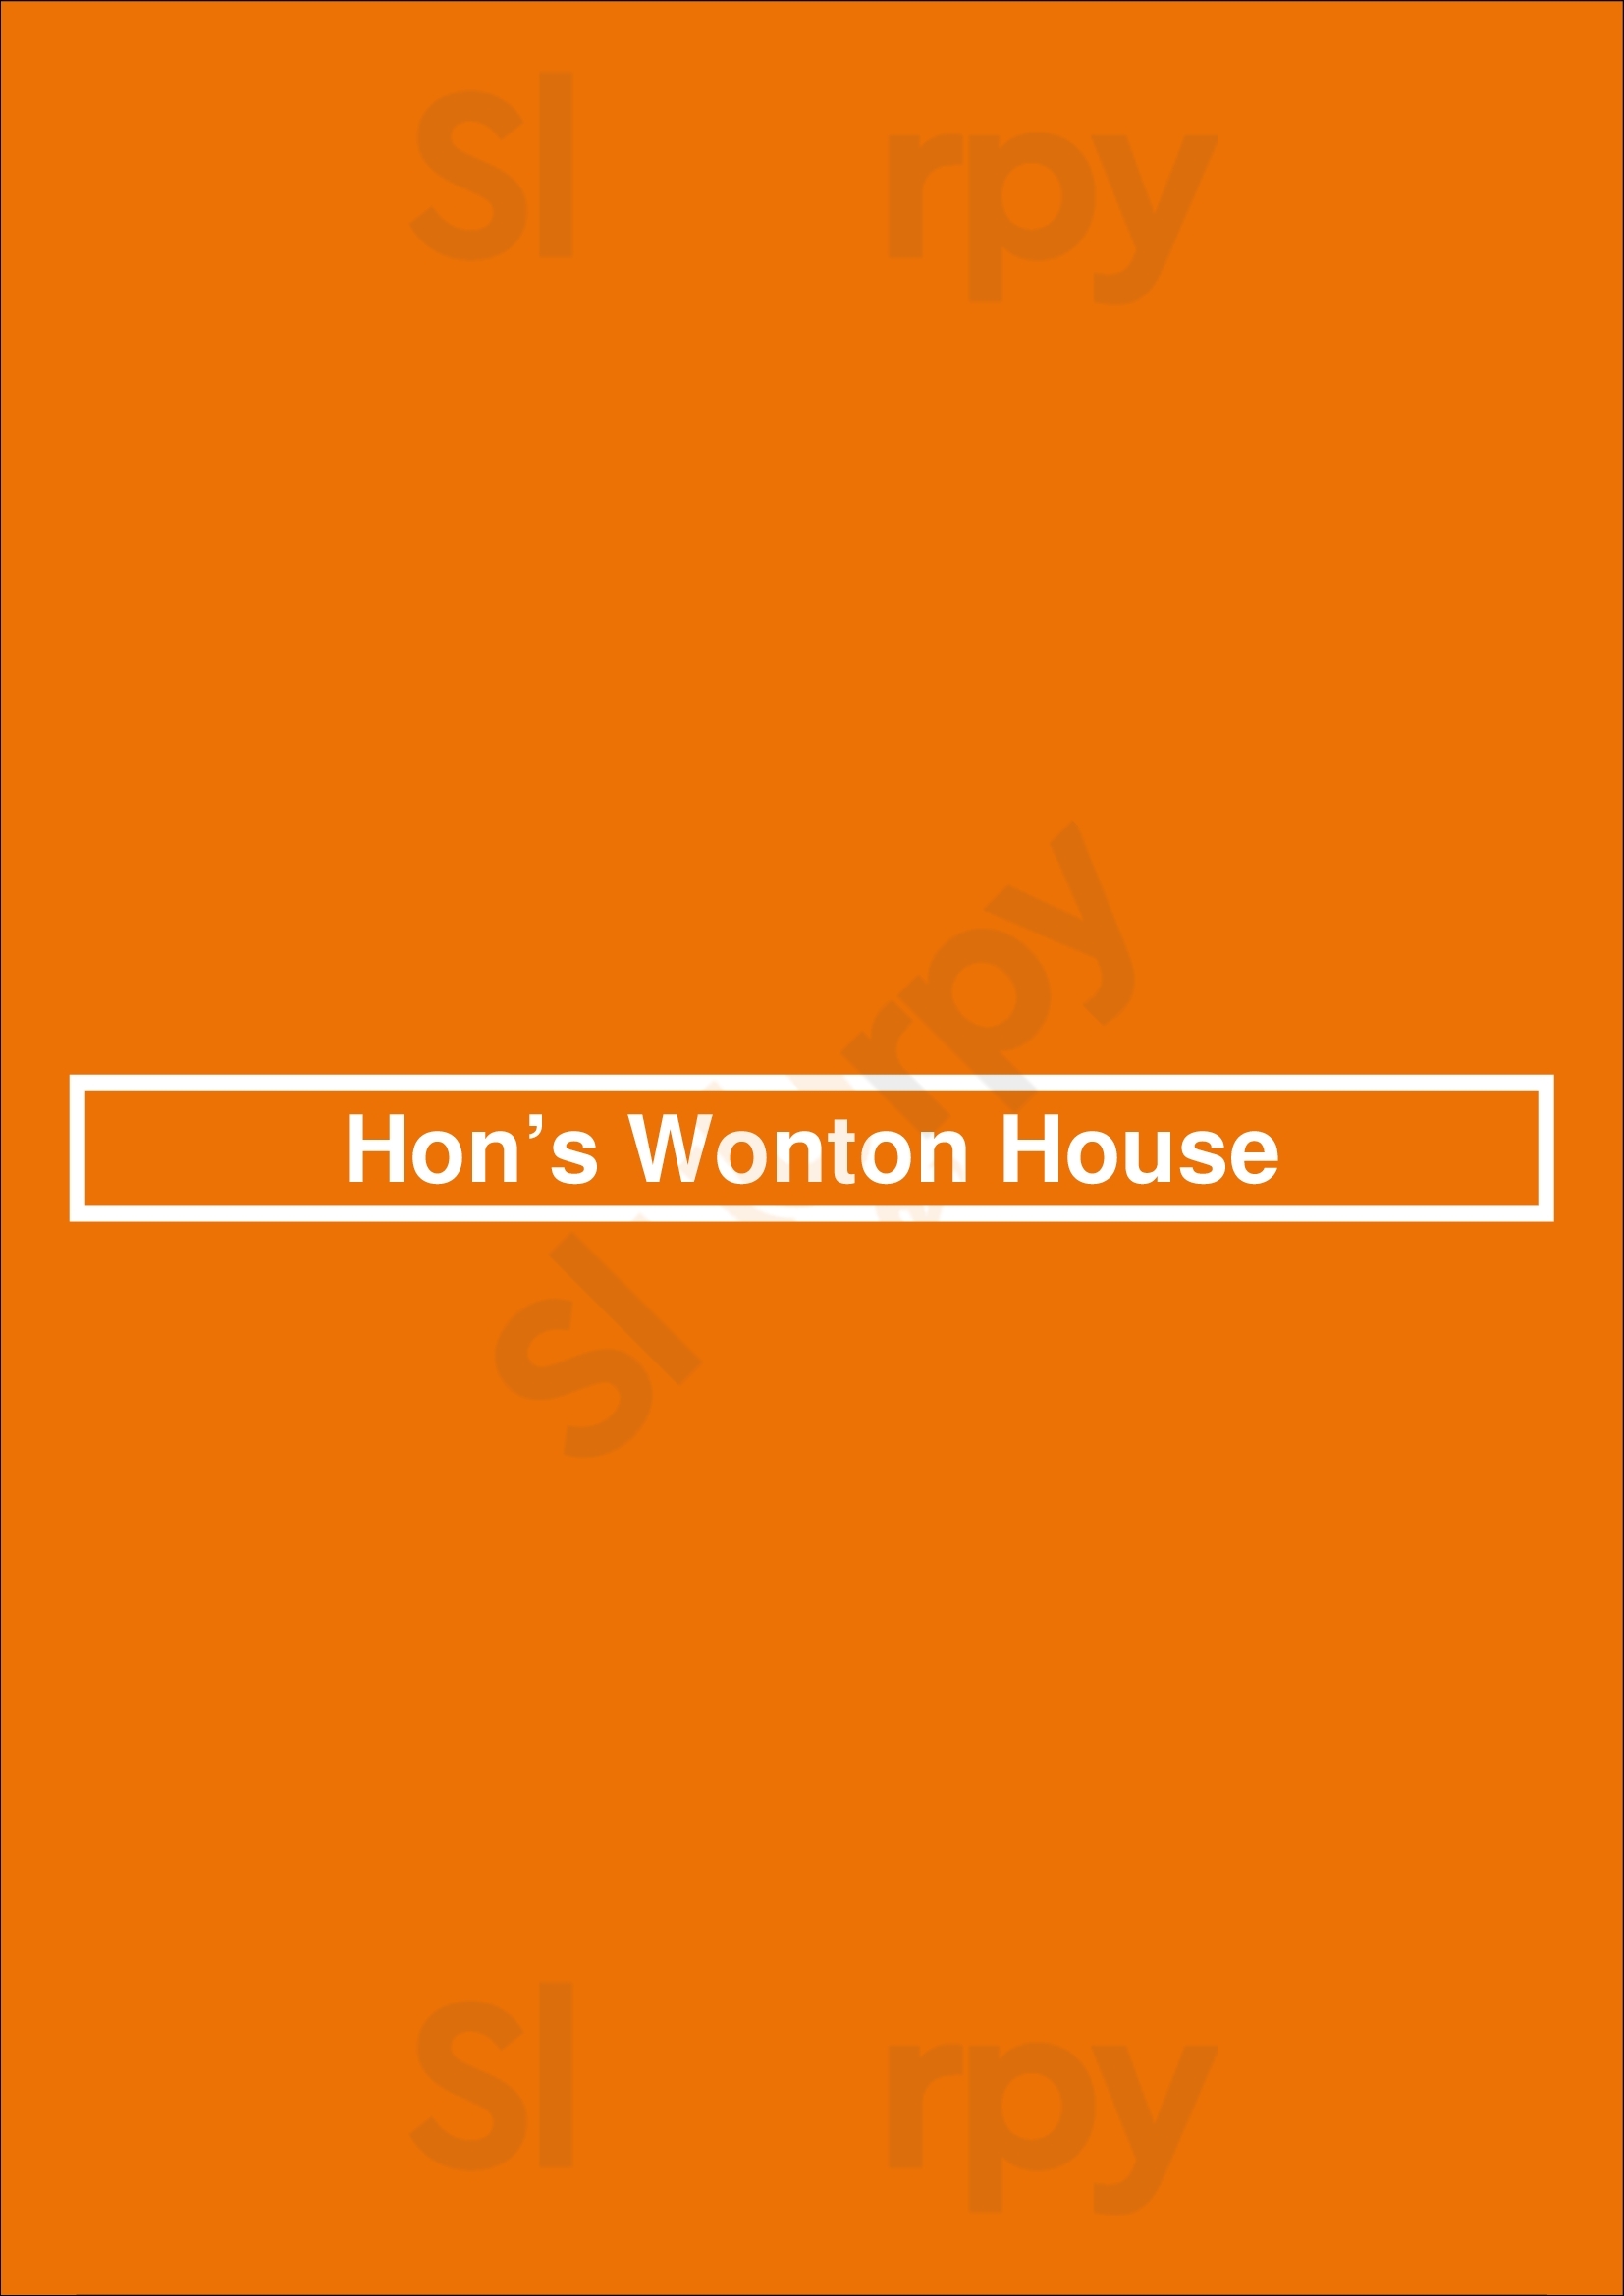 Hon’s Wonton House Vancouver Menu - 1